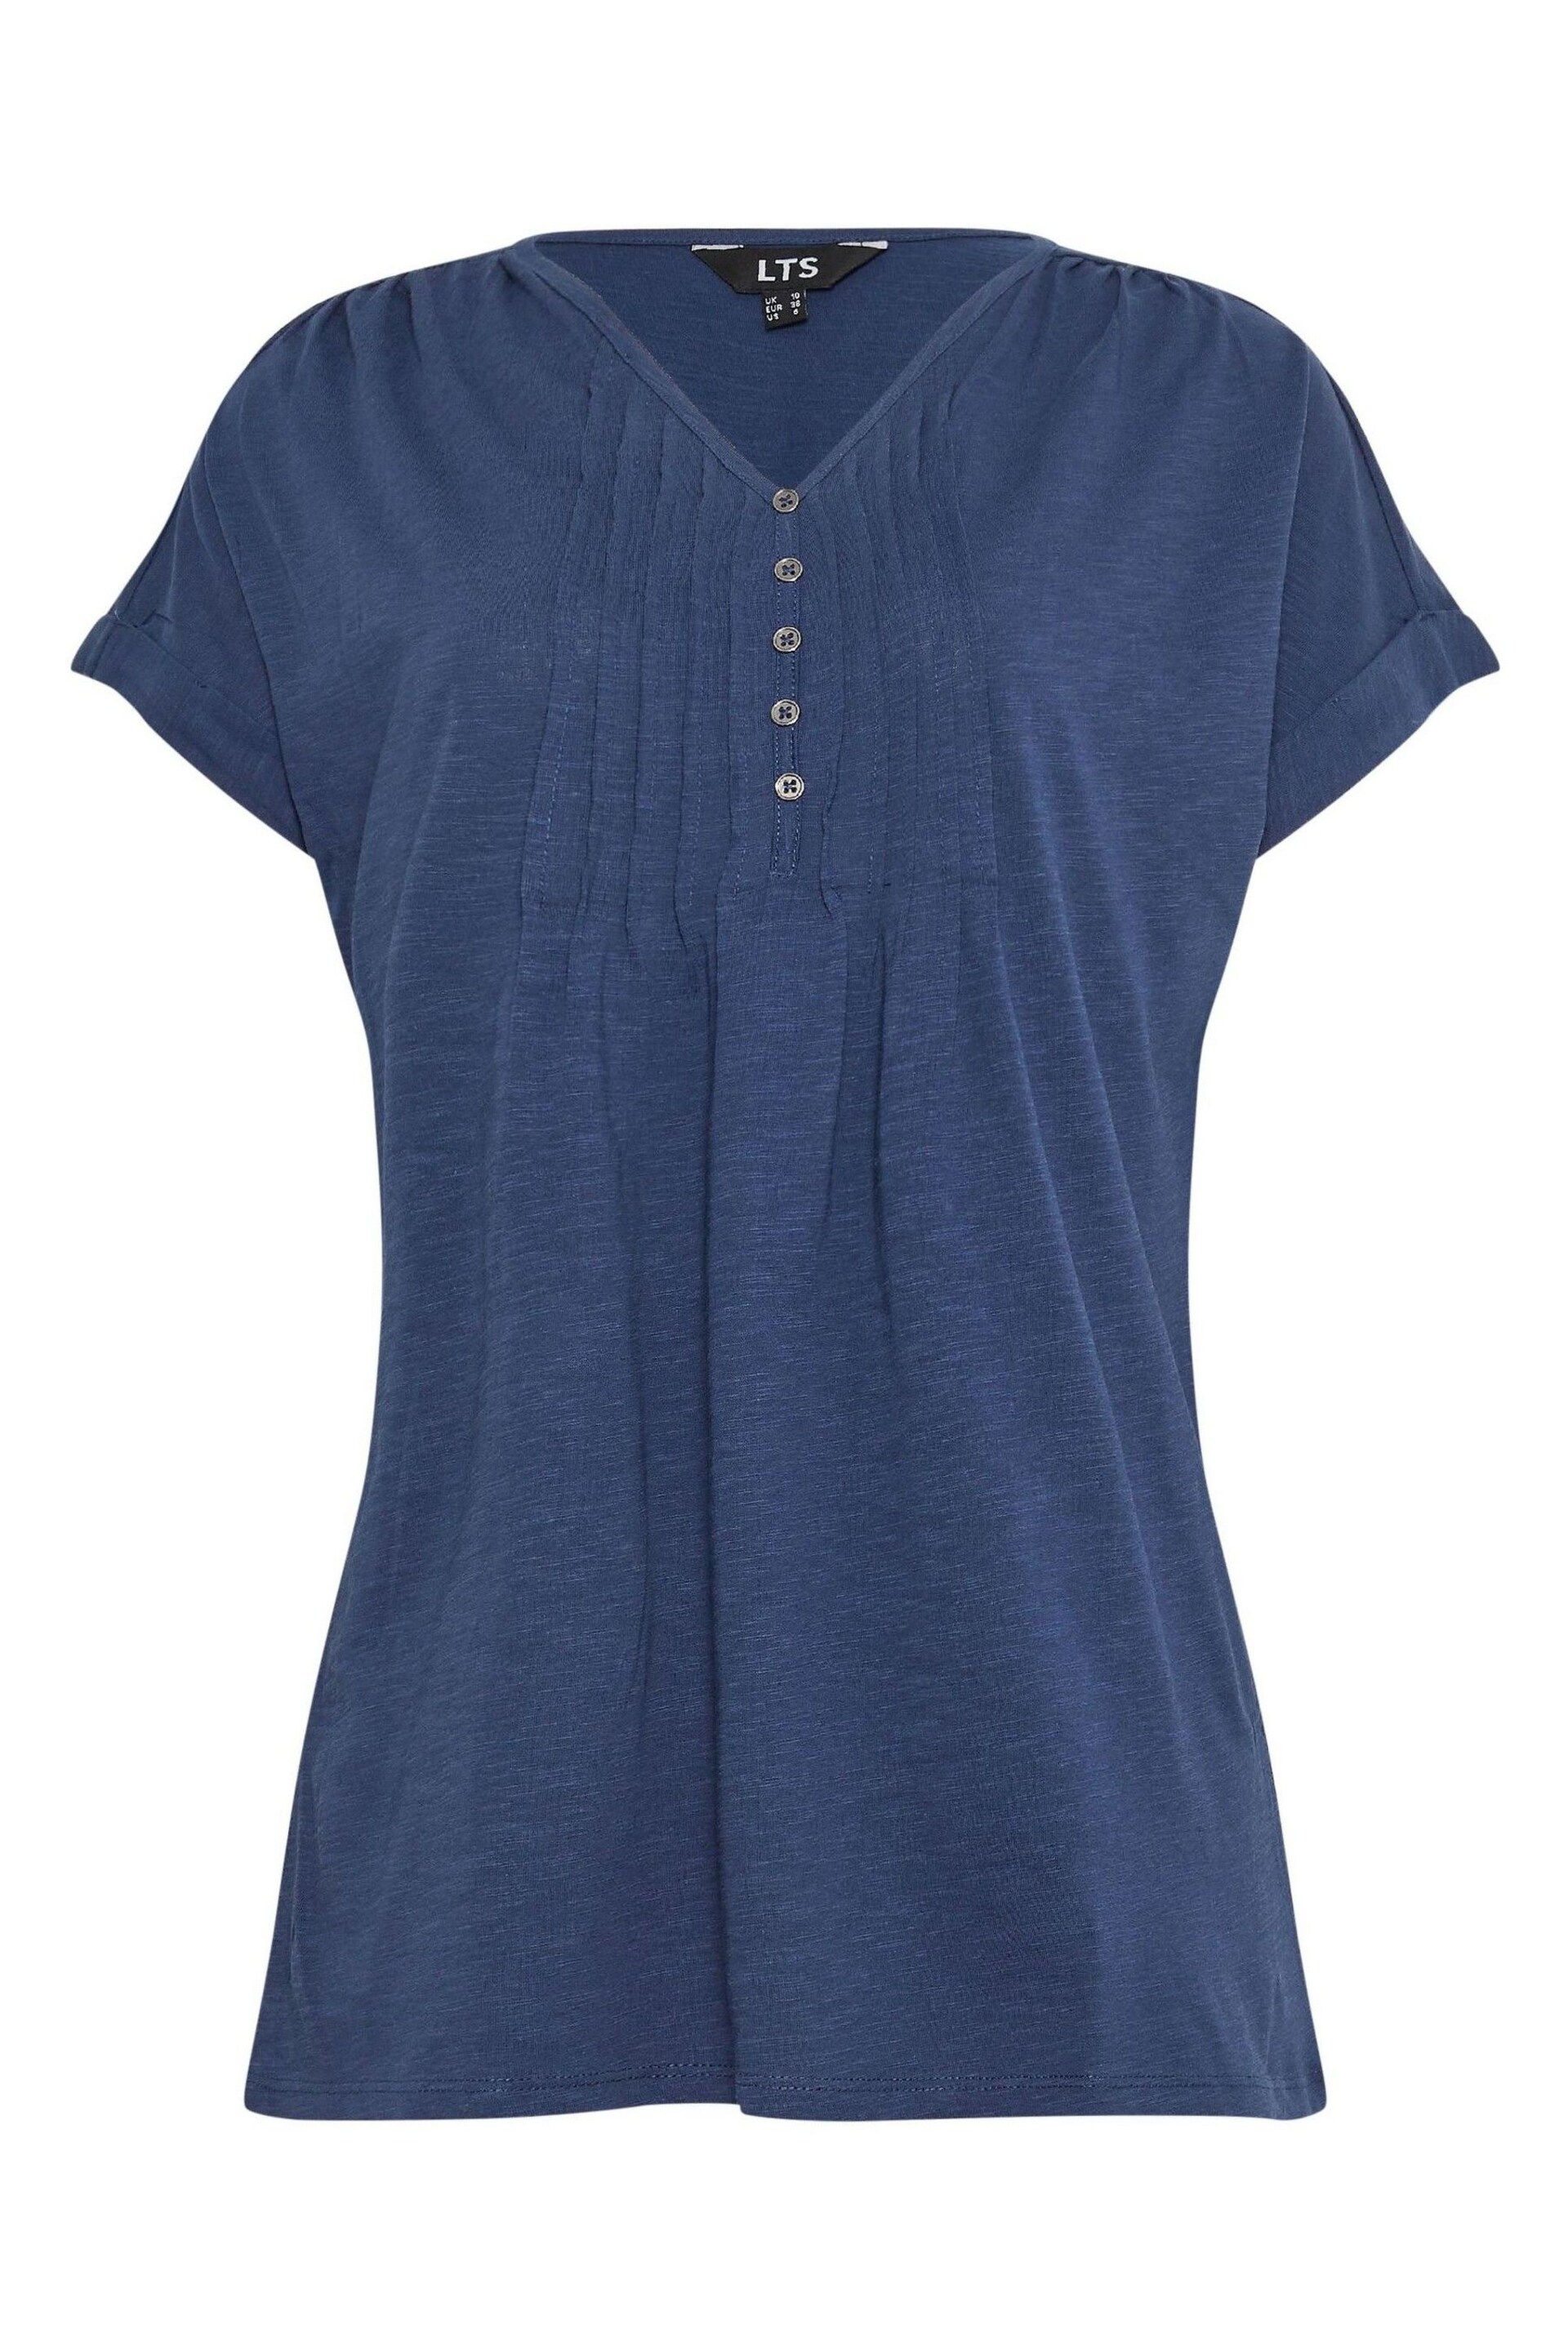 Long Tall Sally Blue LTS Tall Khaki Green Cotton Henley T-Shirt - Image 6 of 6